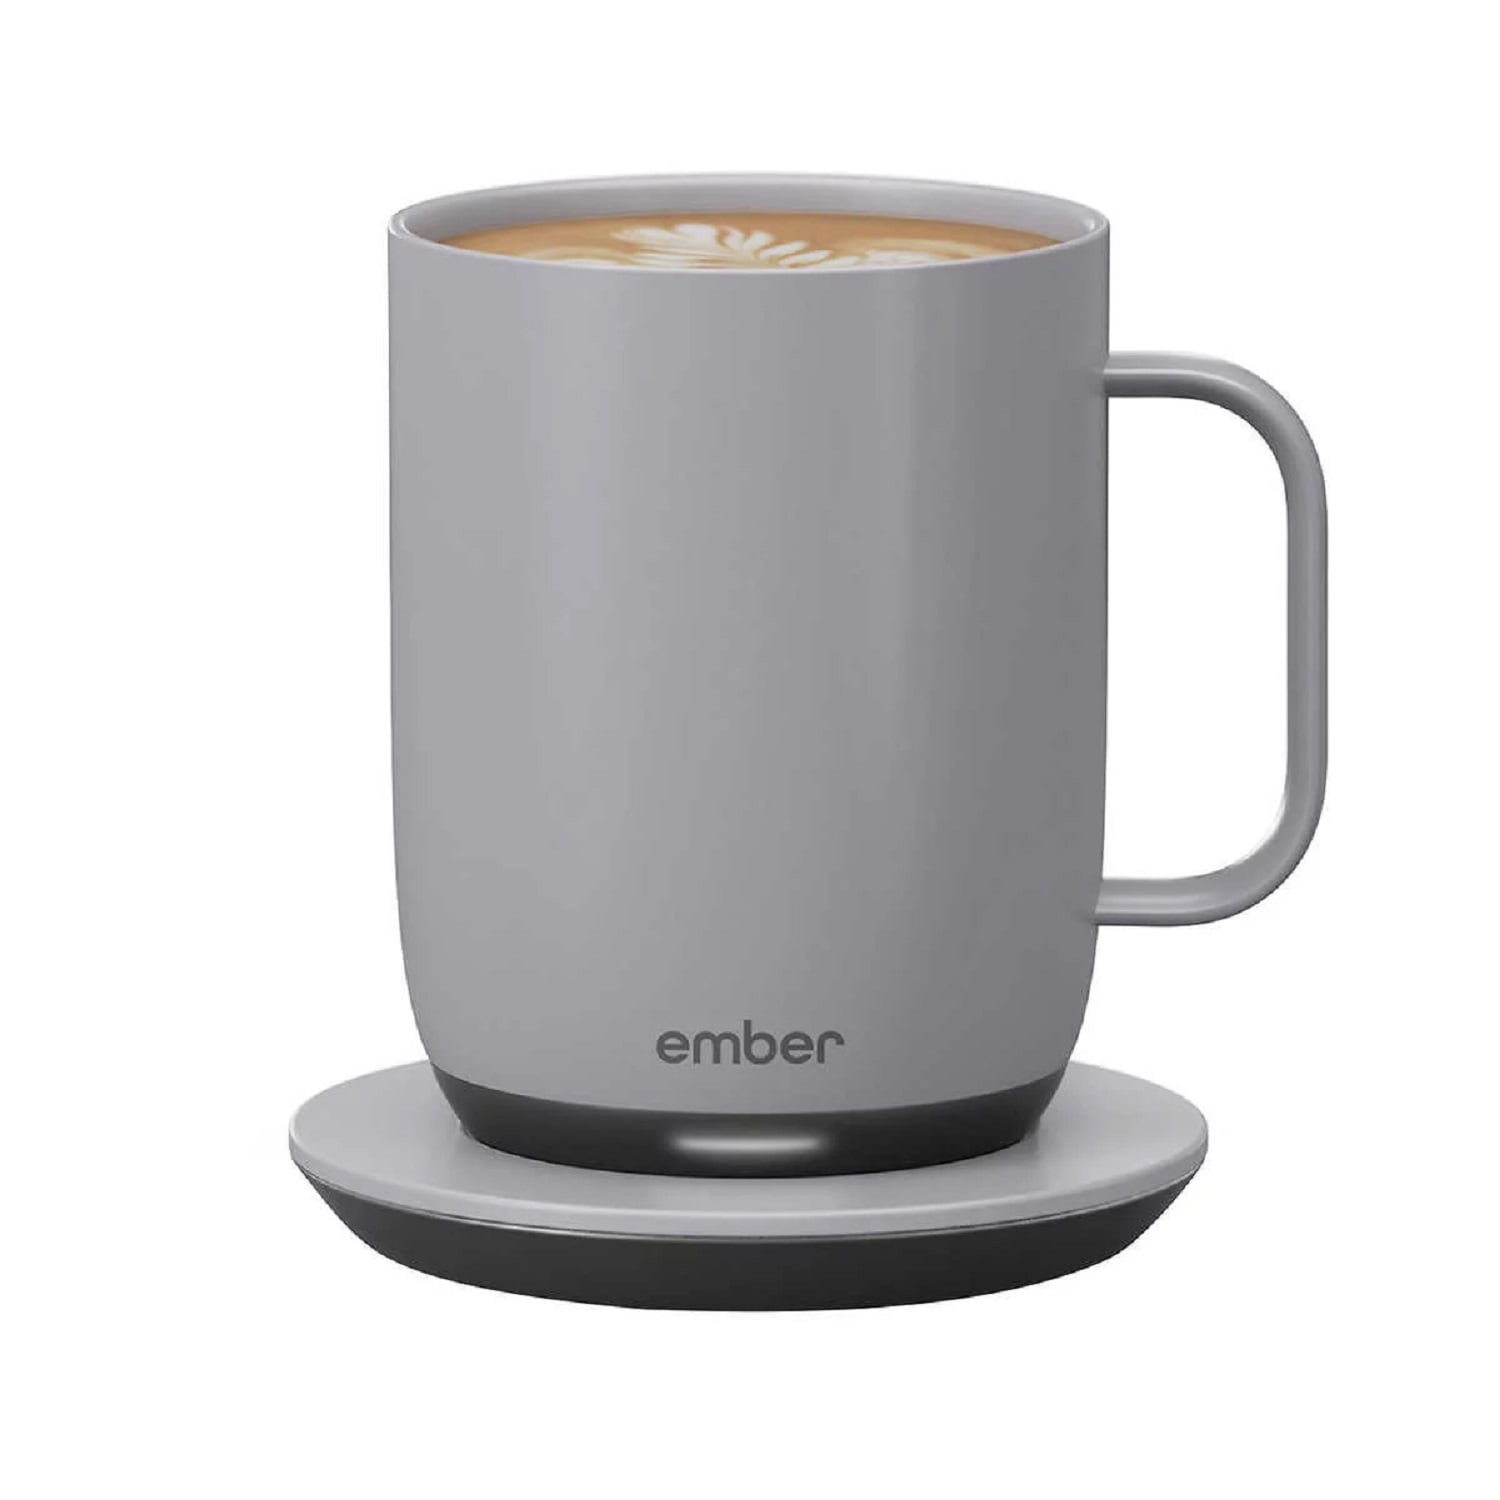 Ember Temperature Control Ceramic Mug review: Never let your